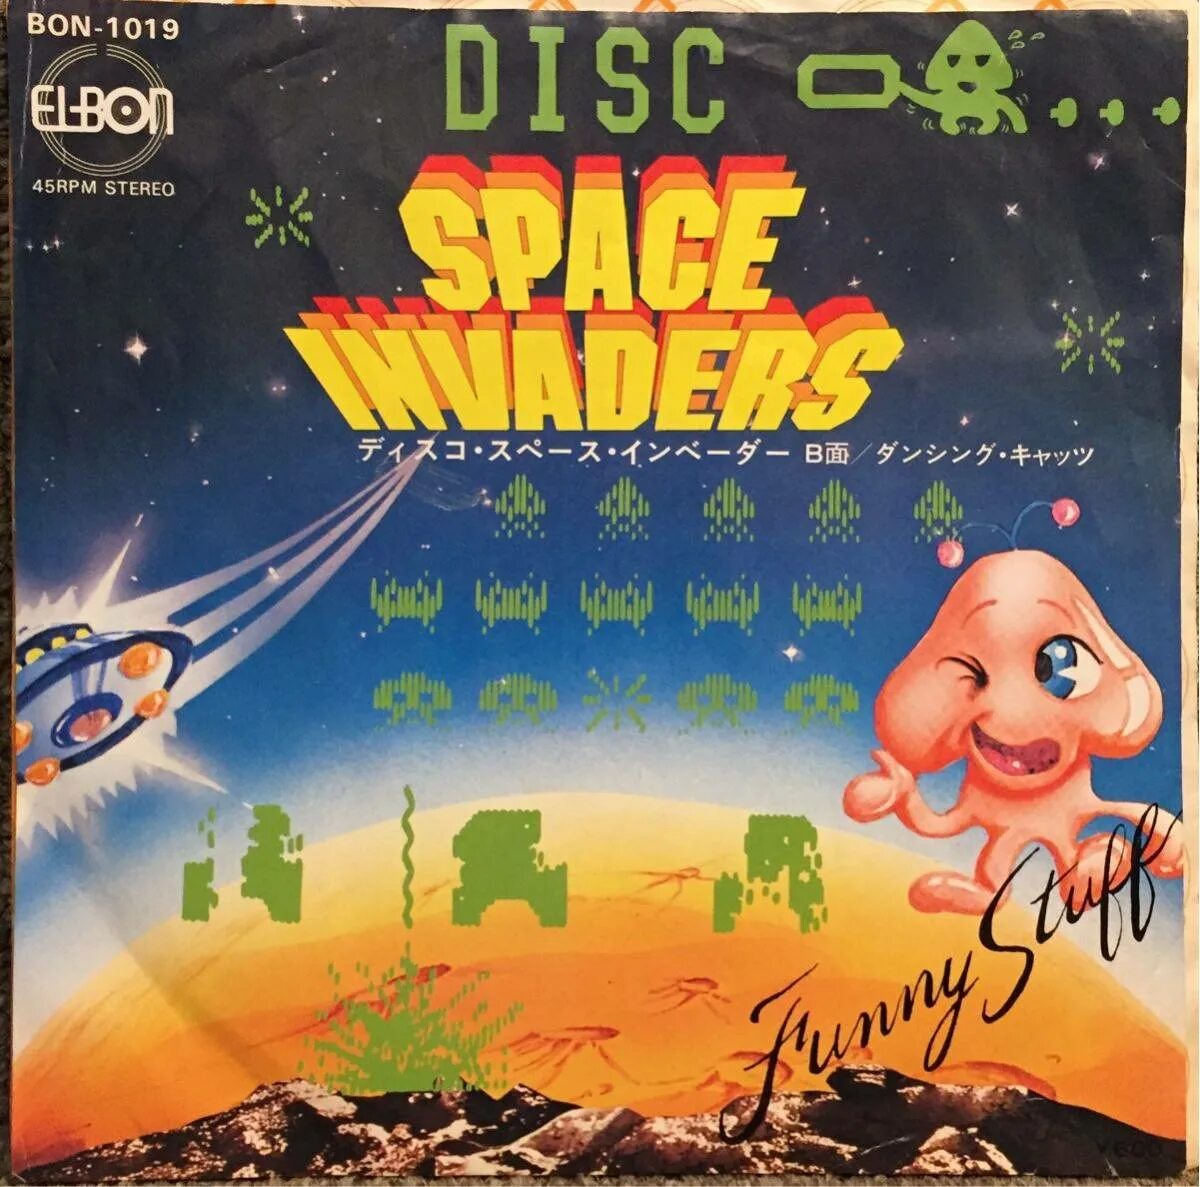 Space disco. Space Disco Dance. Soviet Space Disco. Обложка пластинки 70 80 Спейс диско андроид прыгает по буквам названия. Обложка пластинки 80 Спейс диско андроид прыгает по буквам.